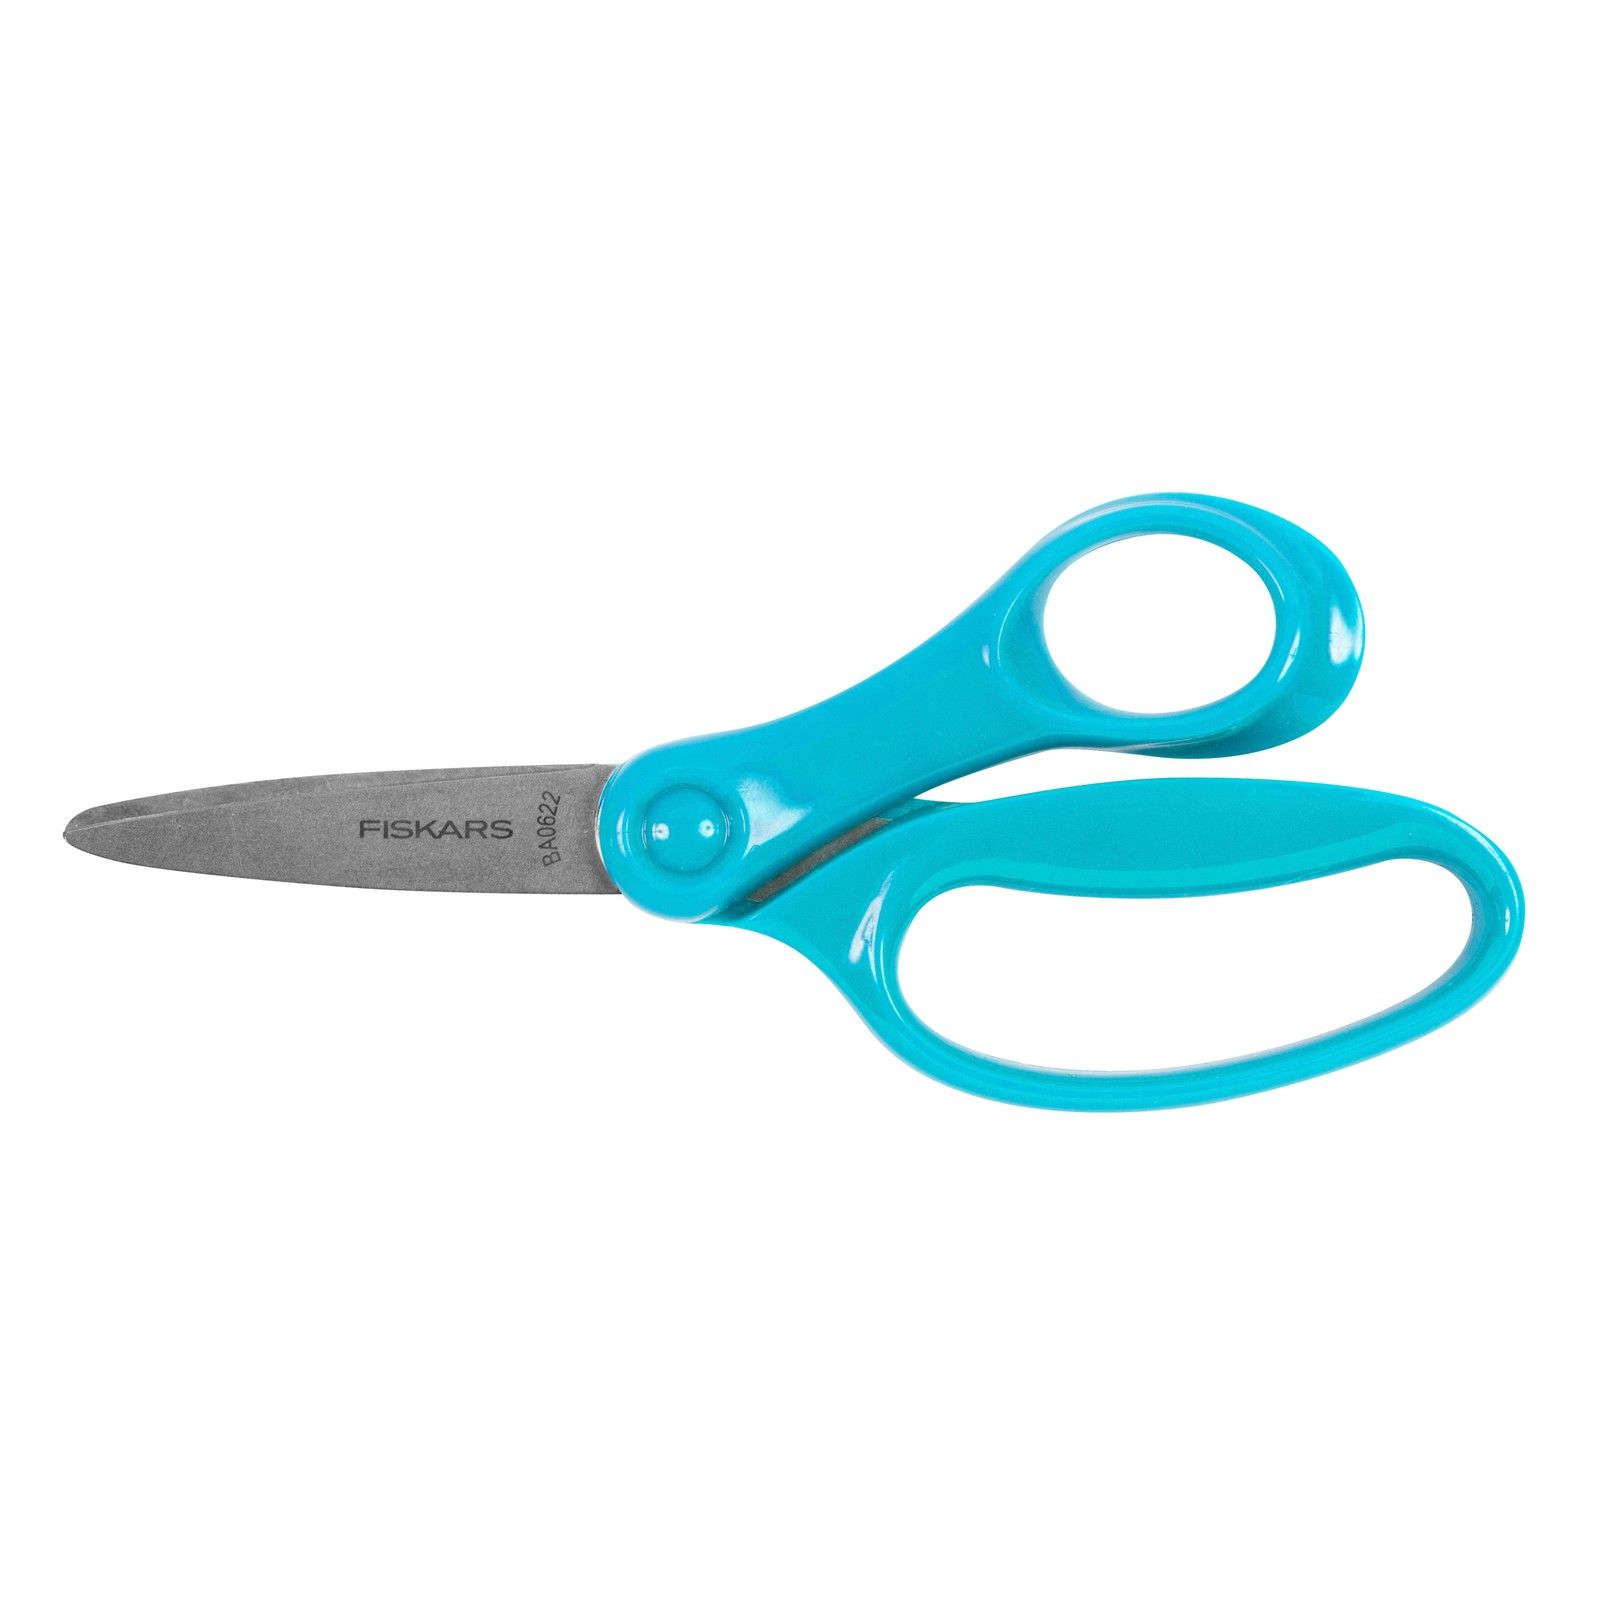 Fiskars • Big kids Scissors Teal 15cm for +8 years old